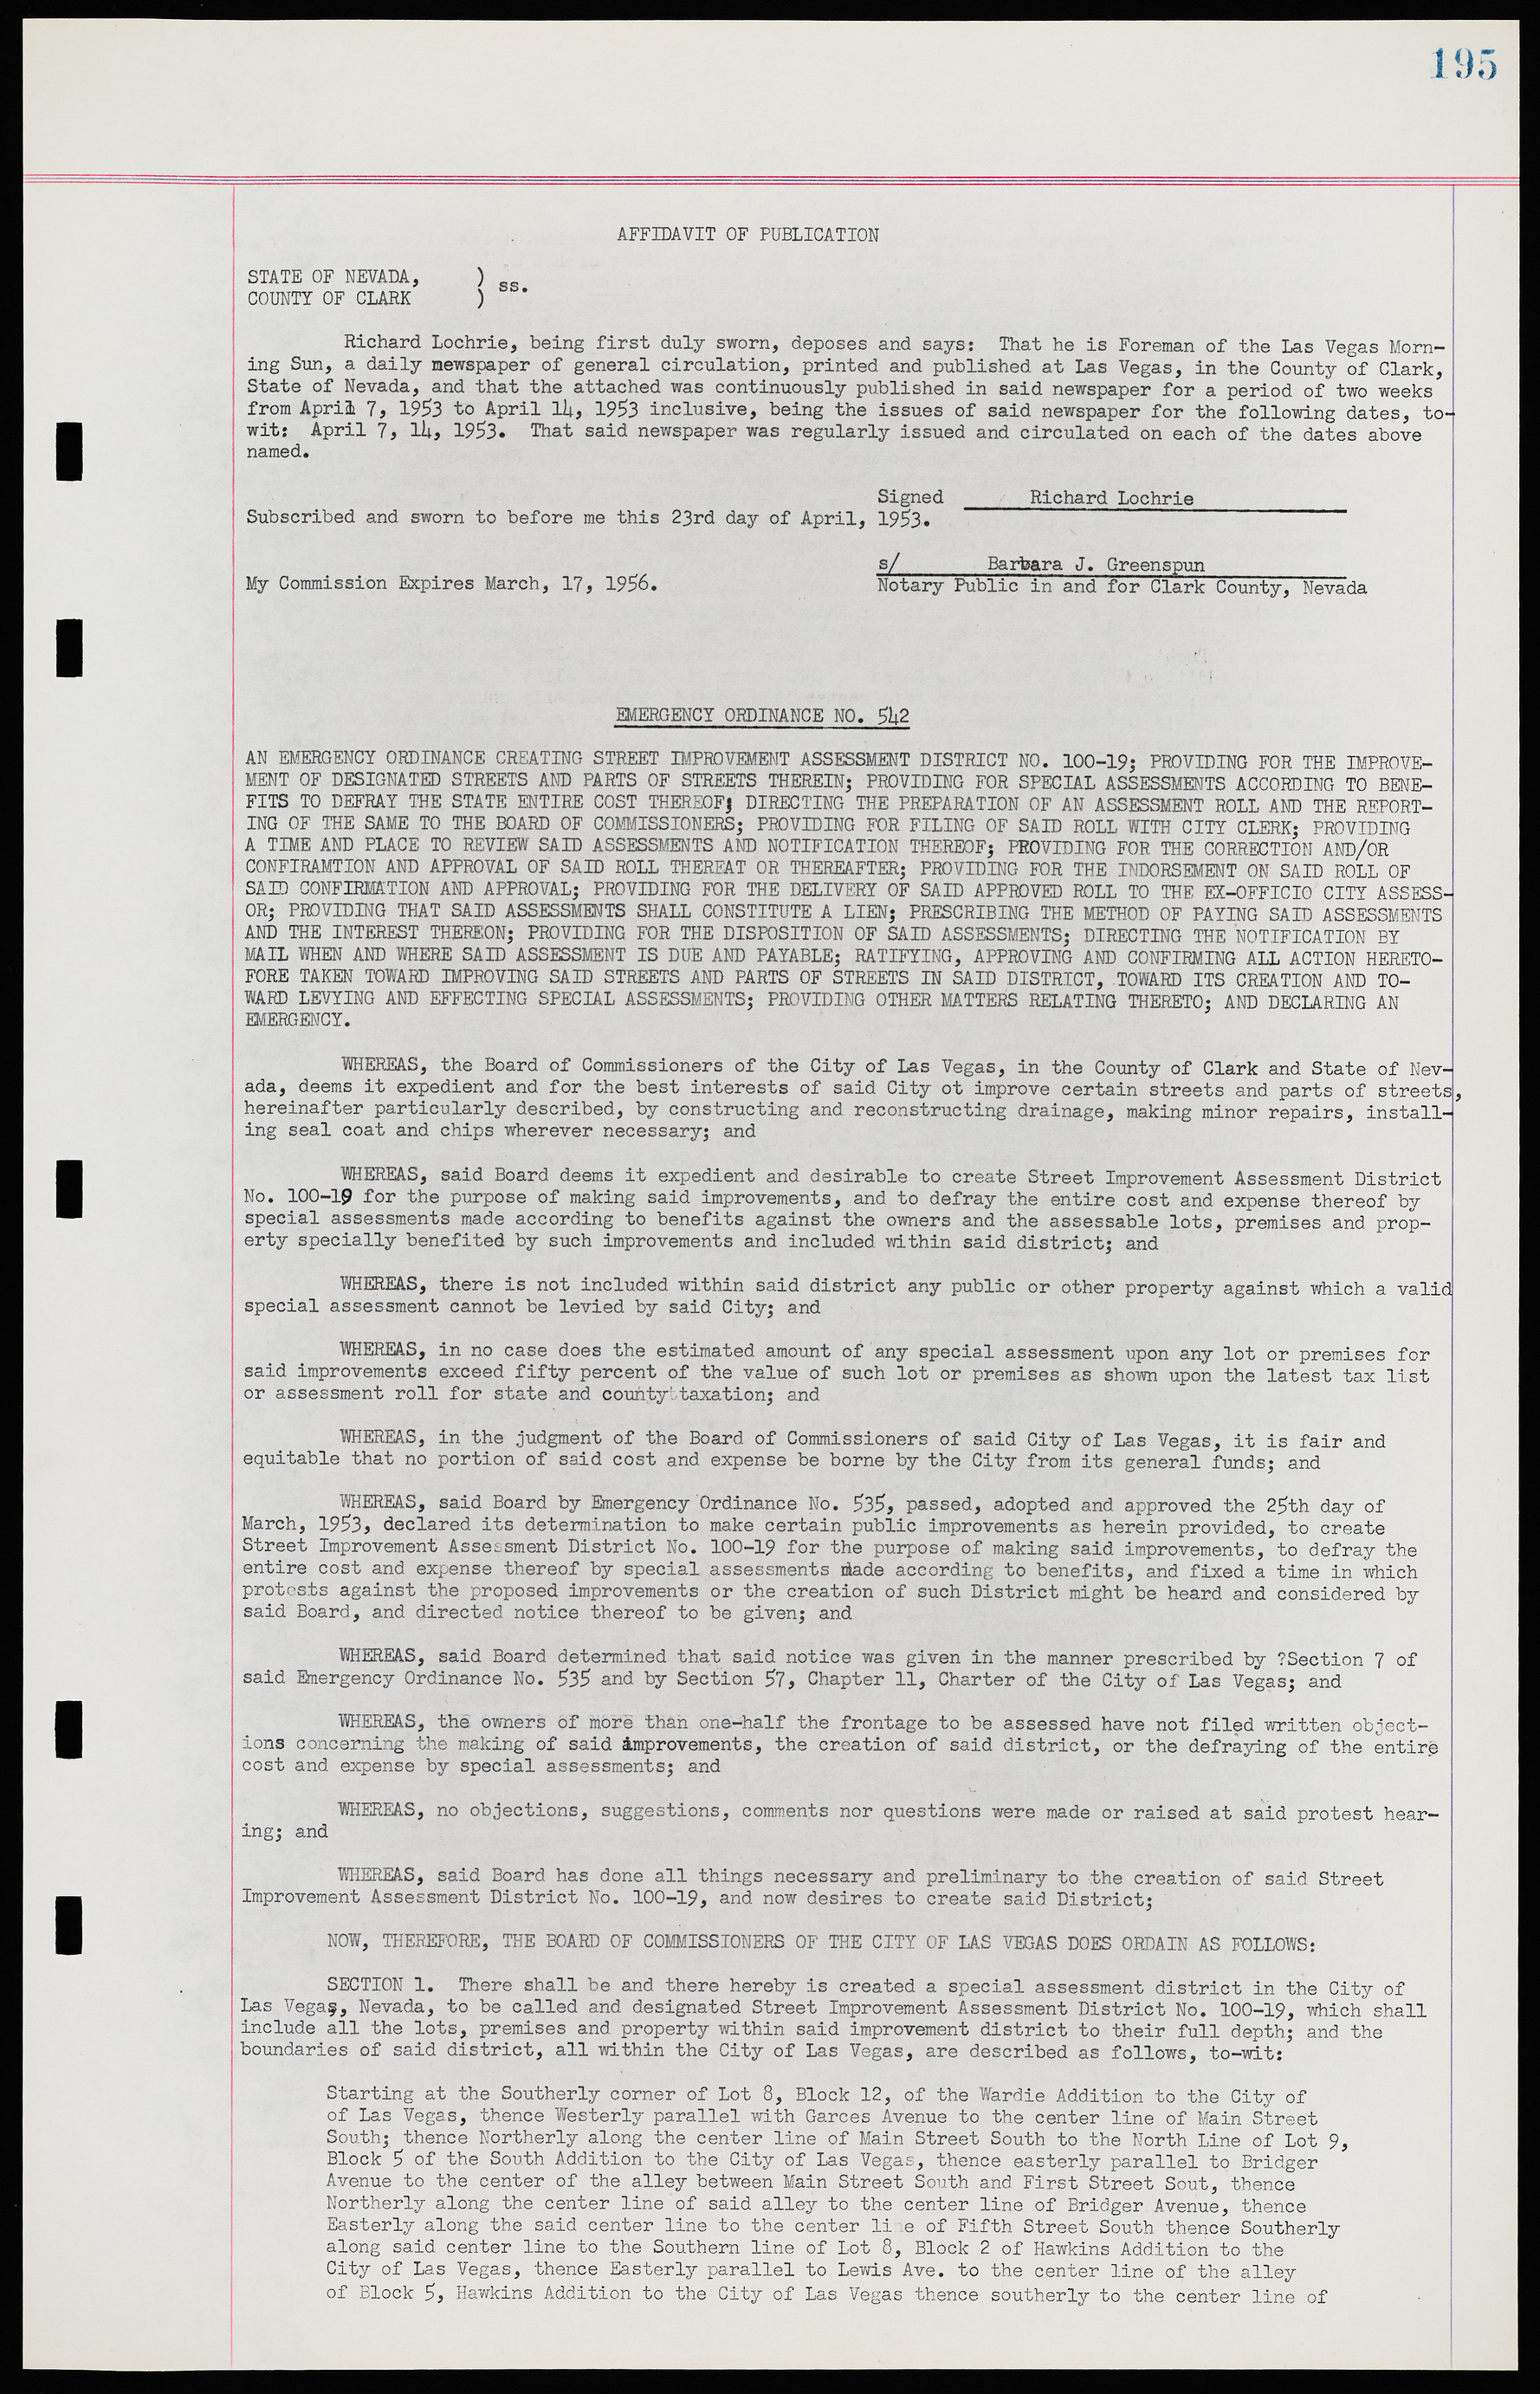 Las Vegas City Ordinances, November 13, 1950 to August 6, 1958, lvc000015-203